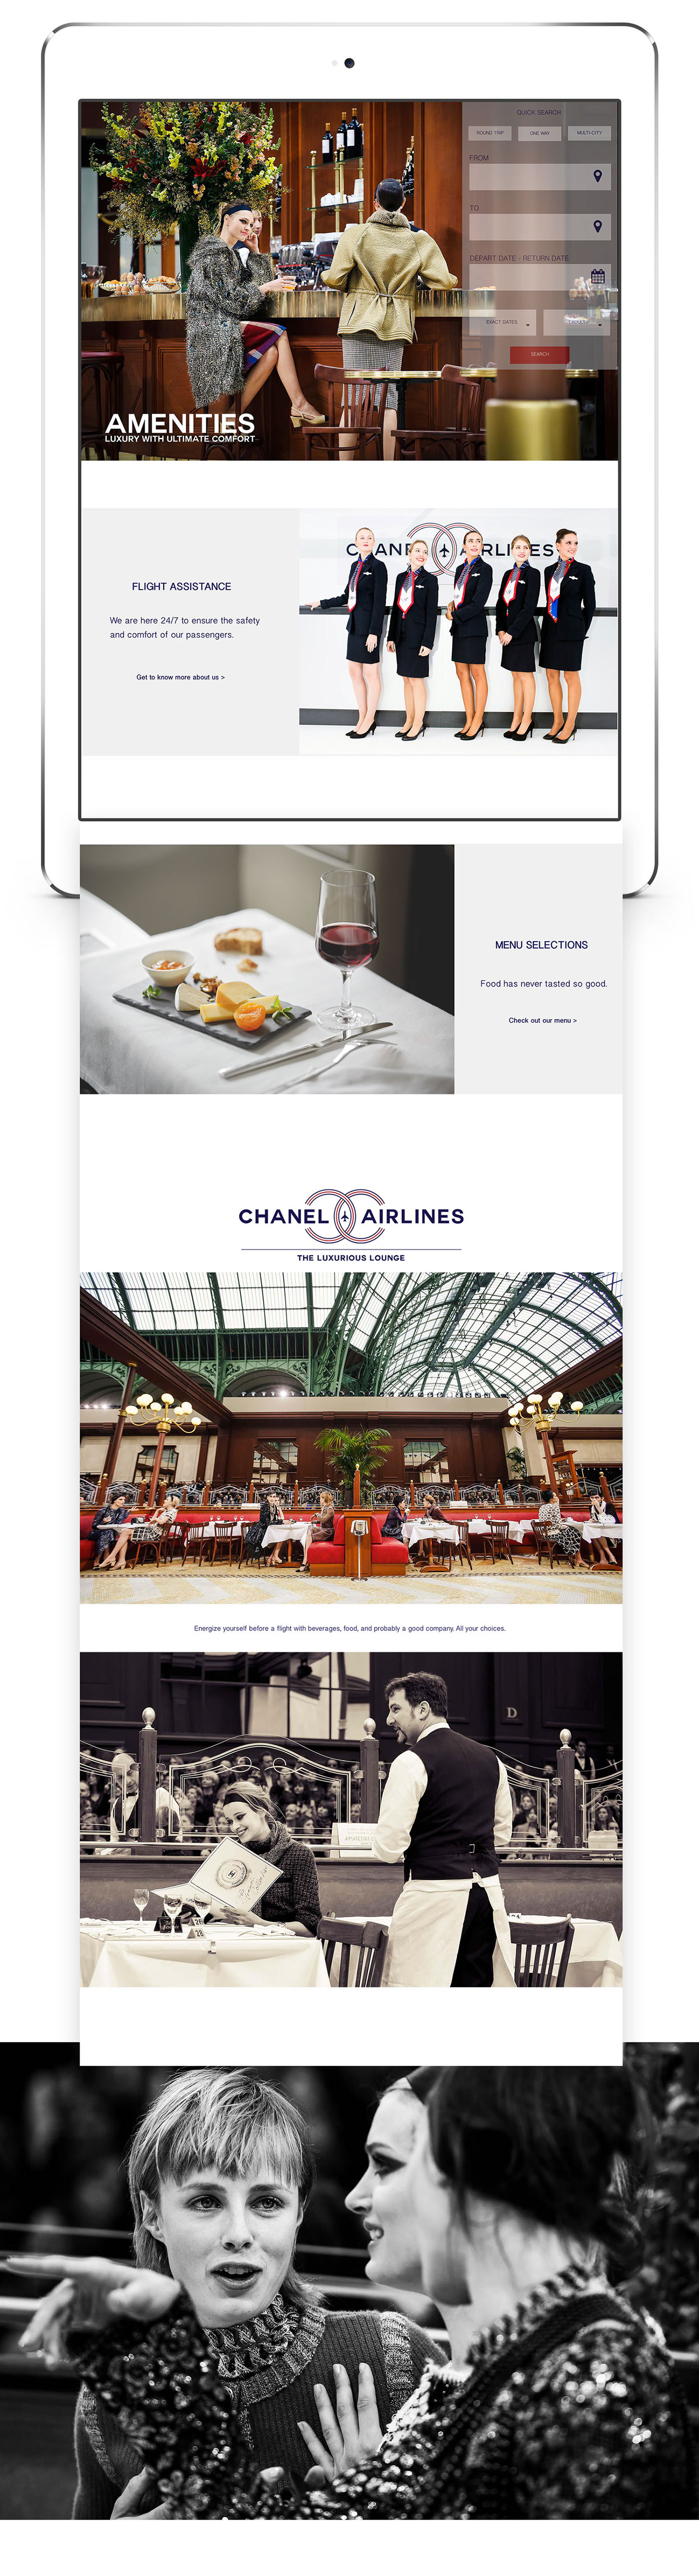 chanel Chanel Airlines Chanel Runway chanel spring 2016 Airline Website Design ui design